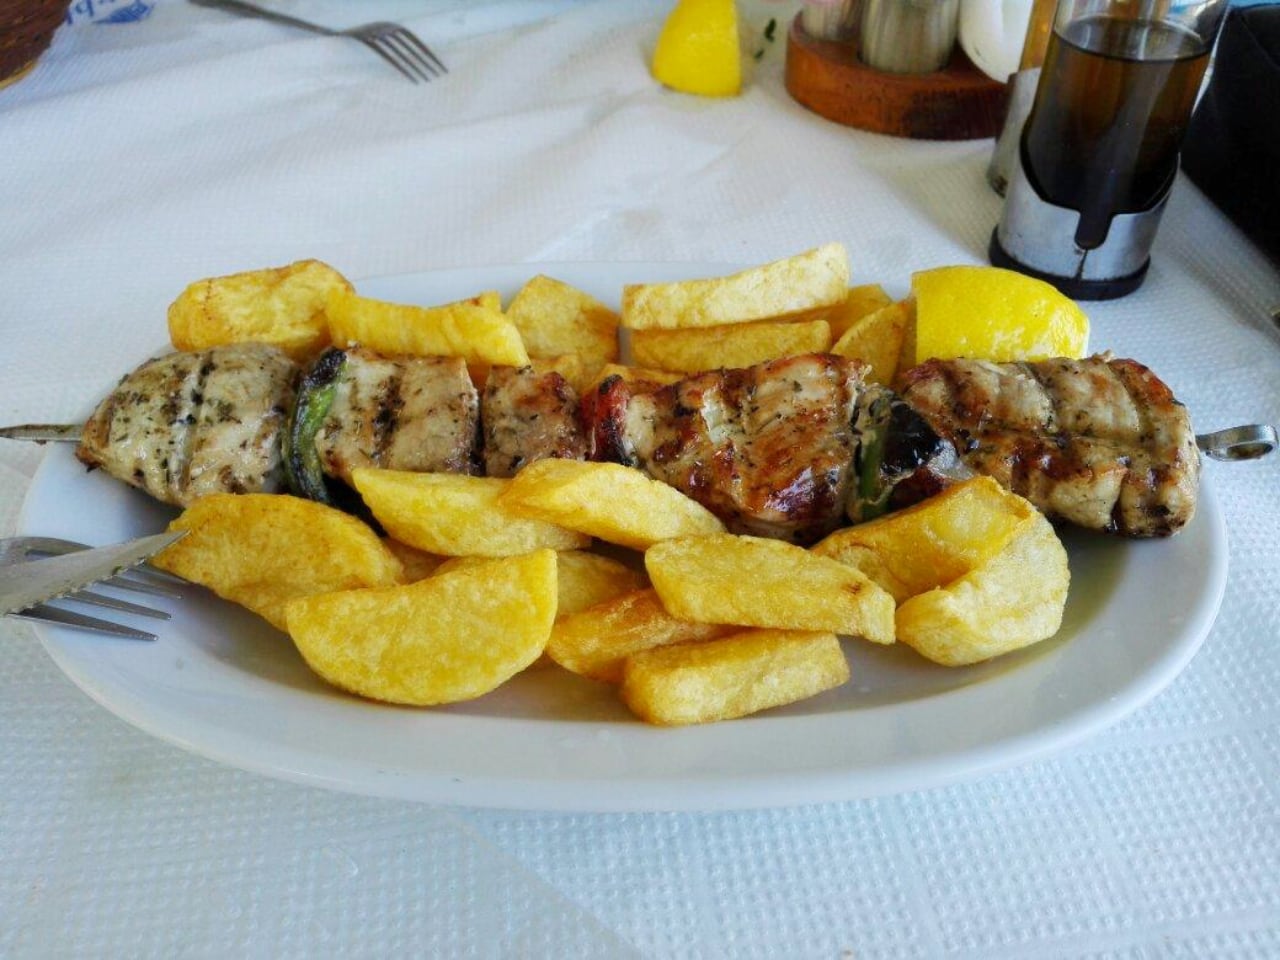 Taverna Stratis at magical Loutro Village, stratis eatery loutro village crete, stratis restaurant loutro, pantelitsa rooms